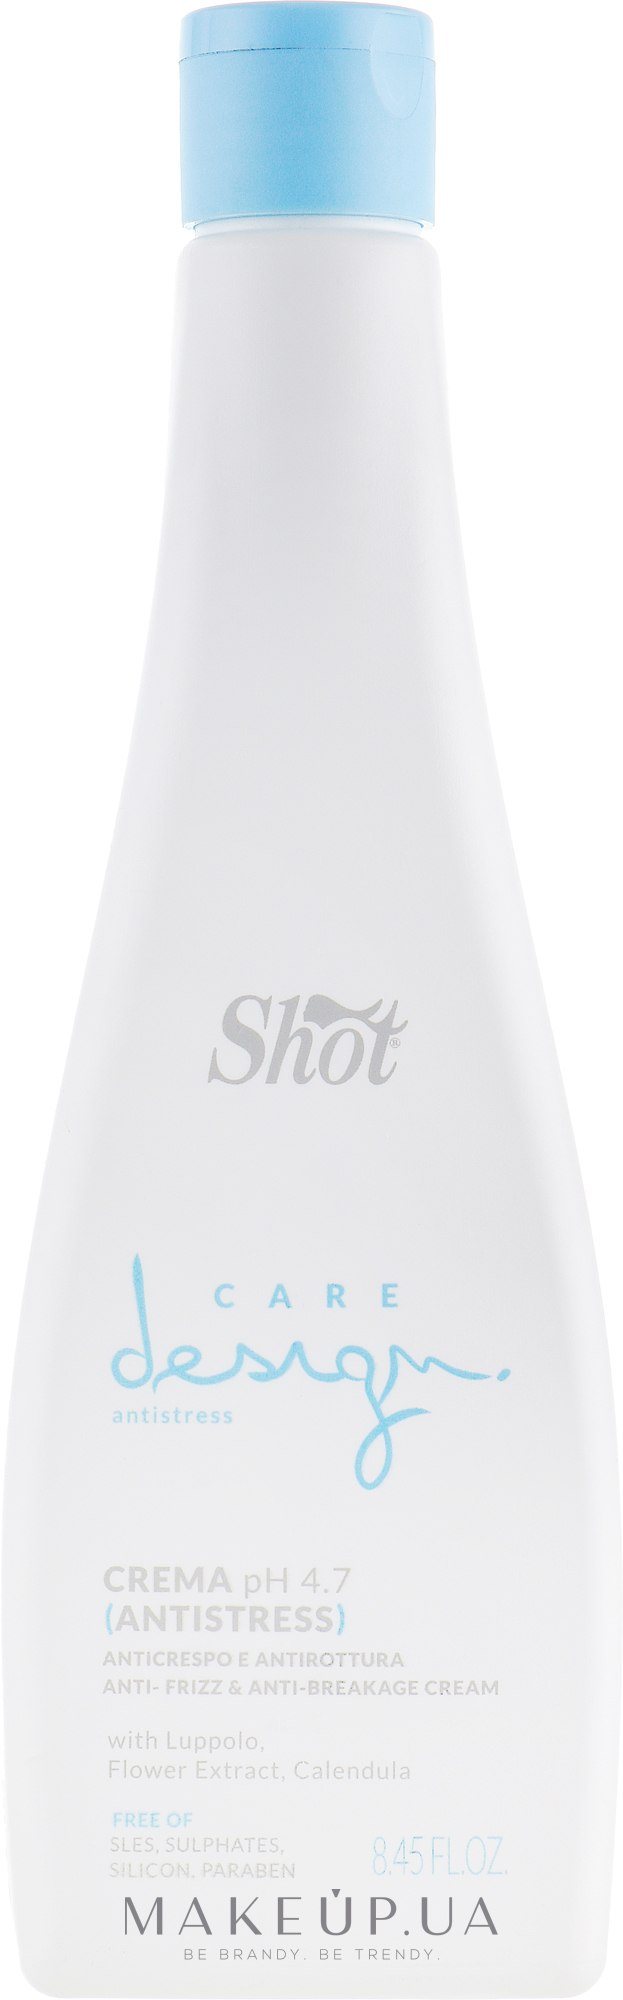 Крем антистресс против ломкости волос - Shot Care Design Antistress Cream — фото 250ml